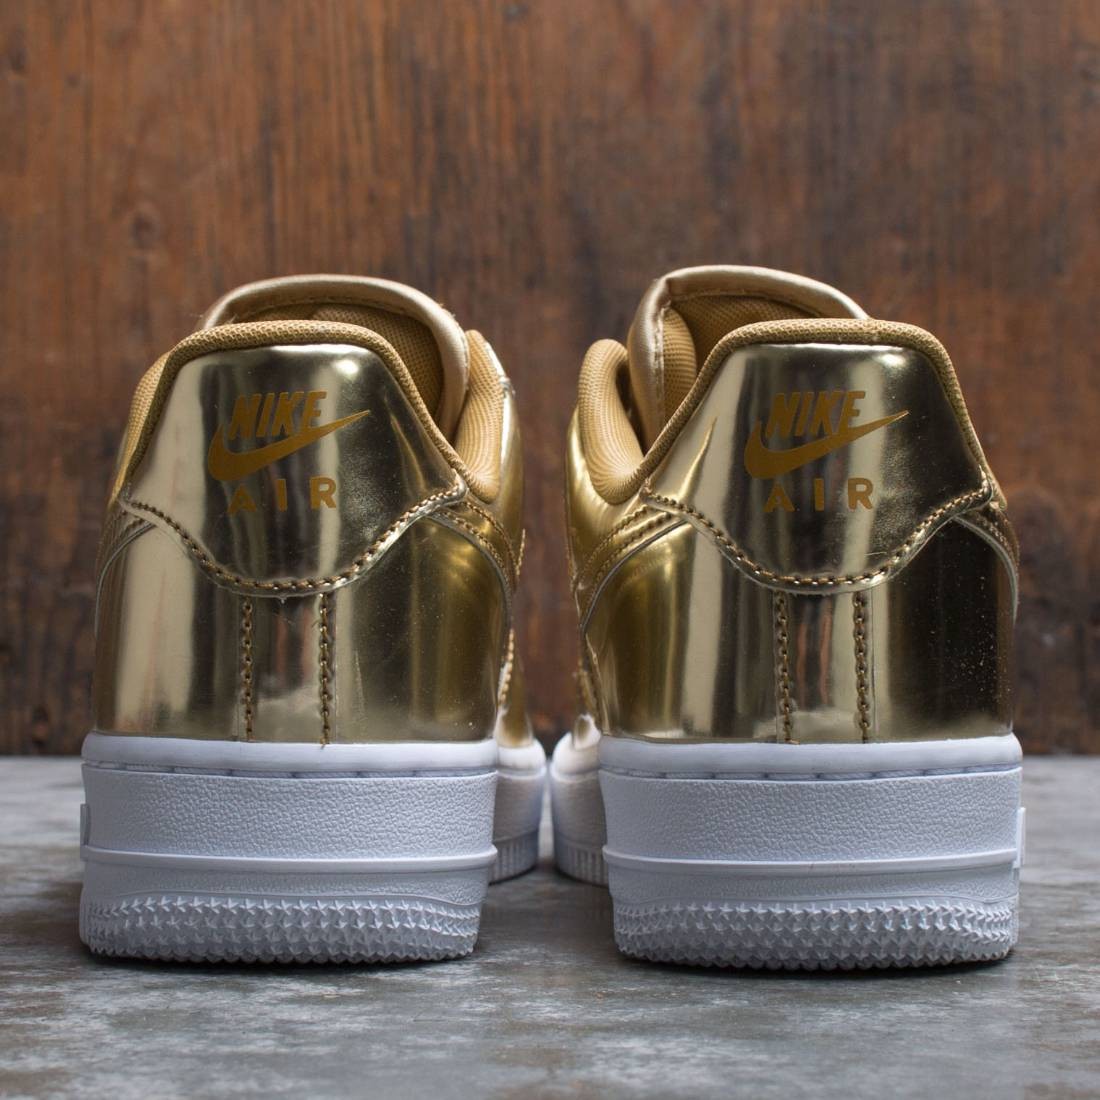 Nike Womens W Air Force 1 Sp Metallic Gold Cq6566 700 Size